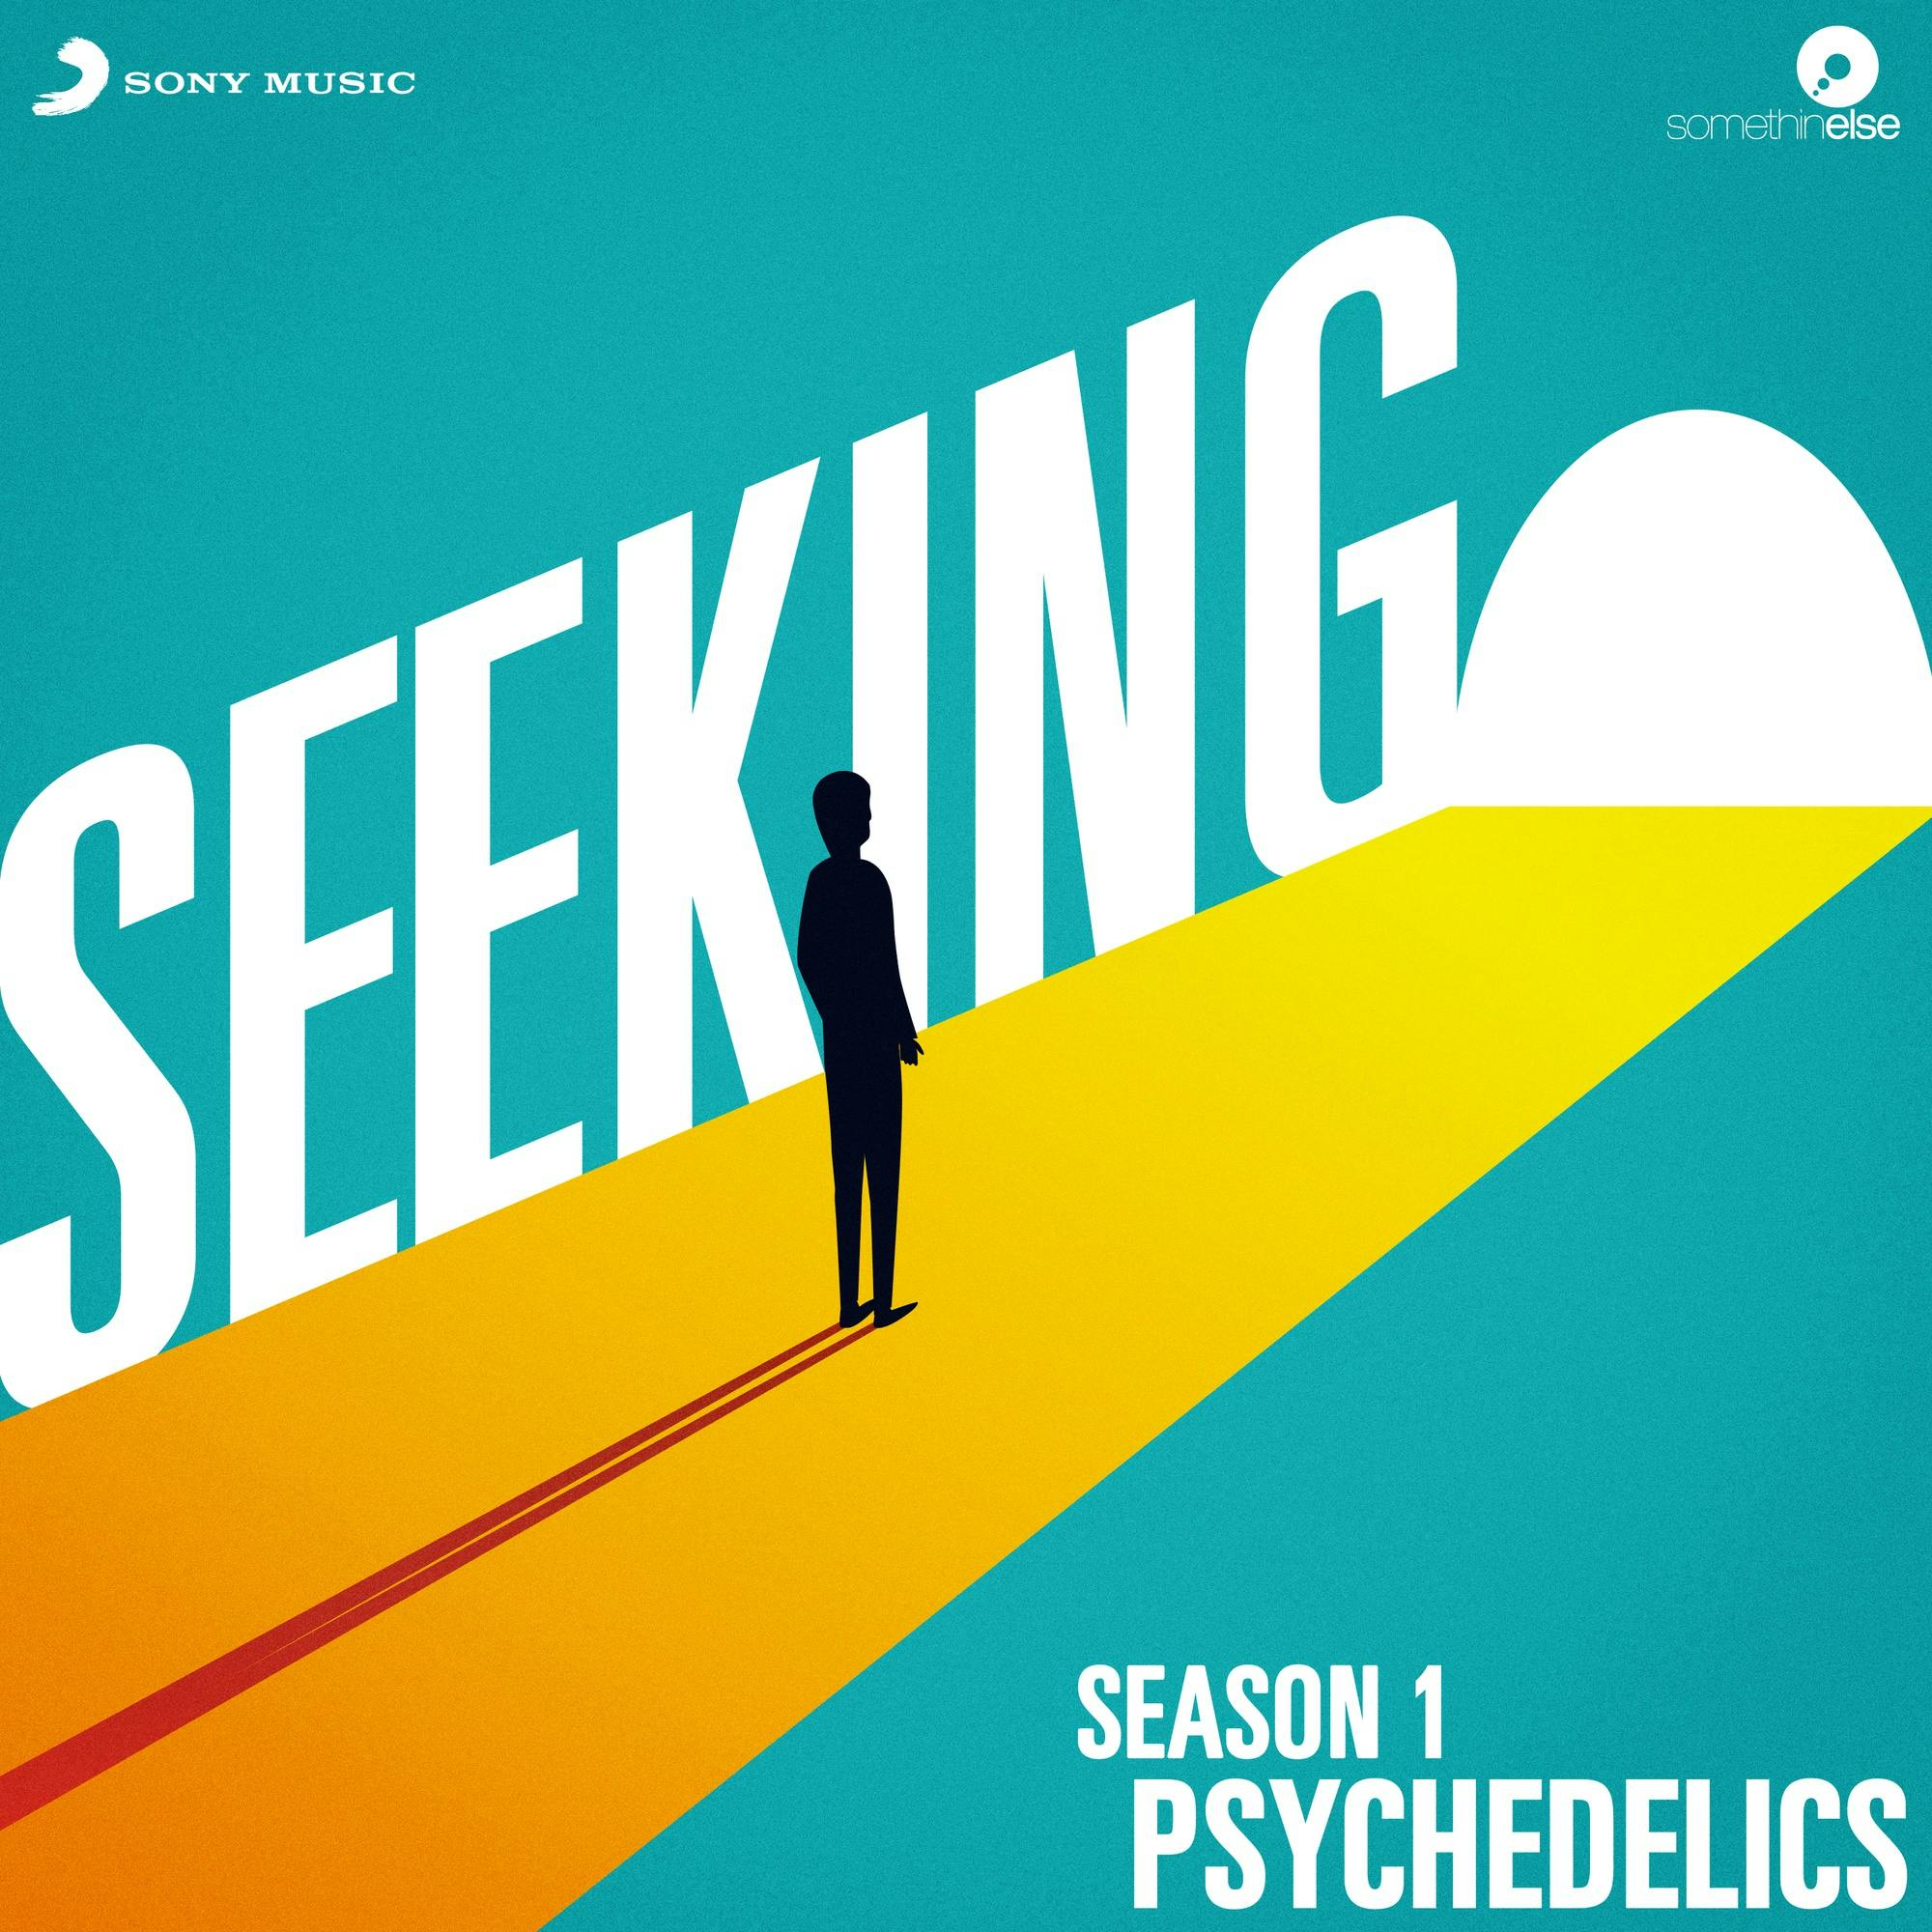 Introducing Seeking Season 1: Psychedelics